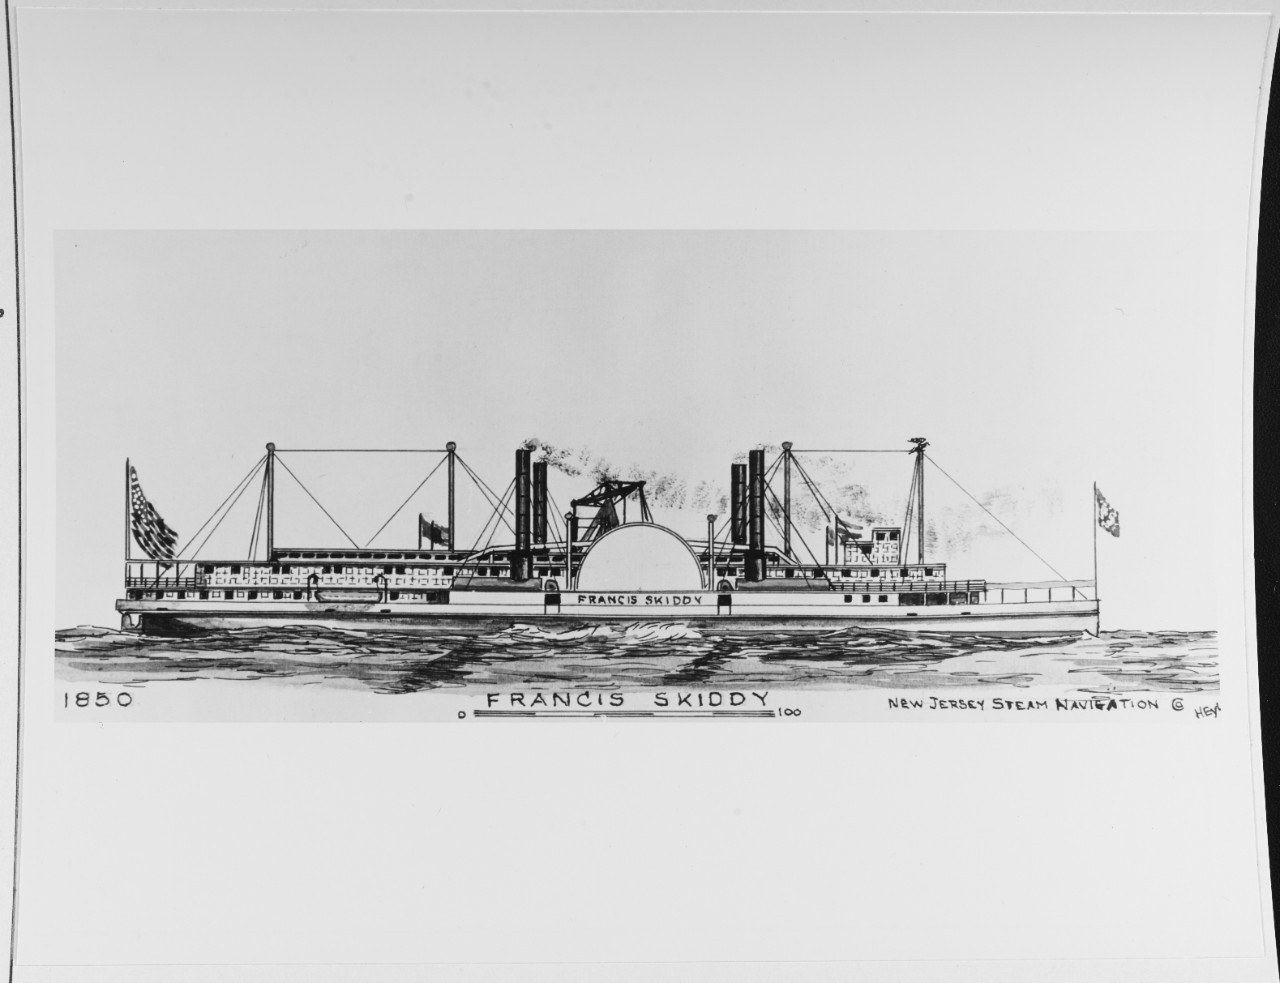 FRANCIS SKIDDY (American merchant steamer, 1849-64)